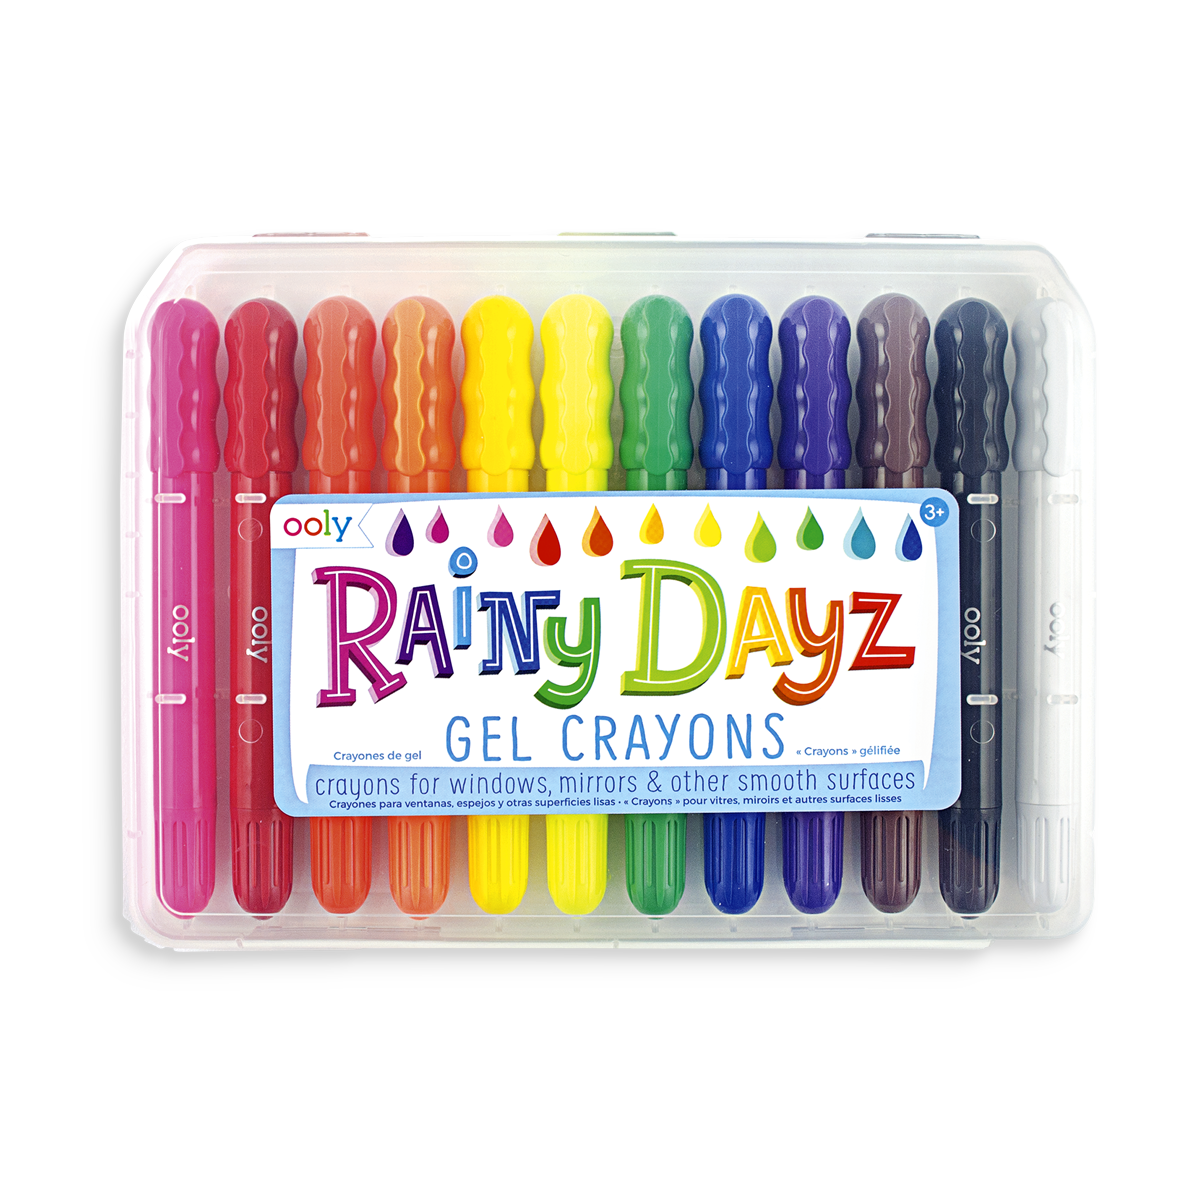 Rainy Dayz Gel Crayons by OOLY - HoneyBug 